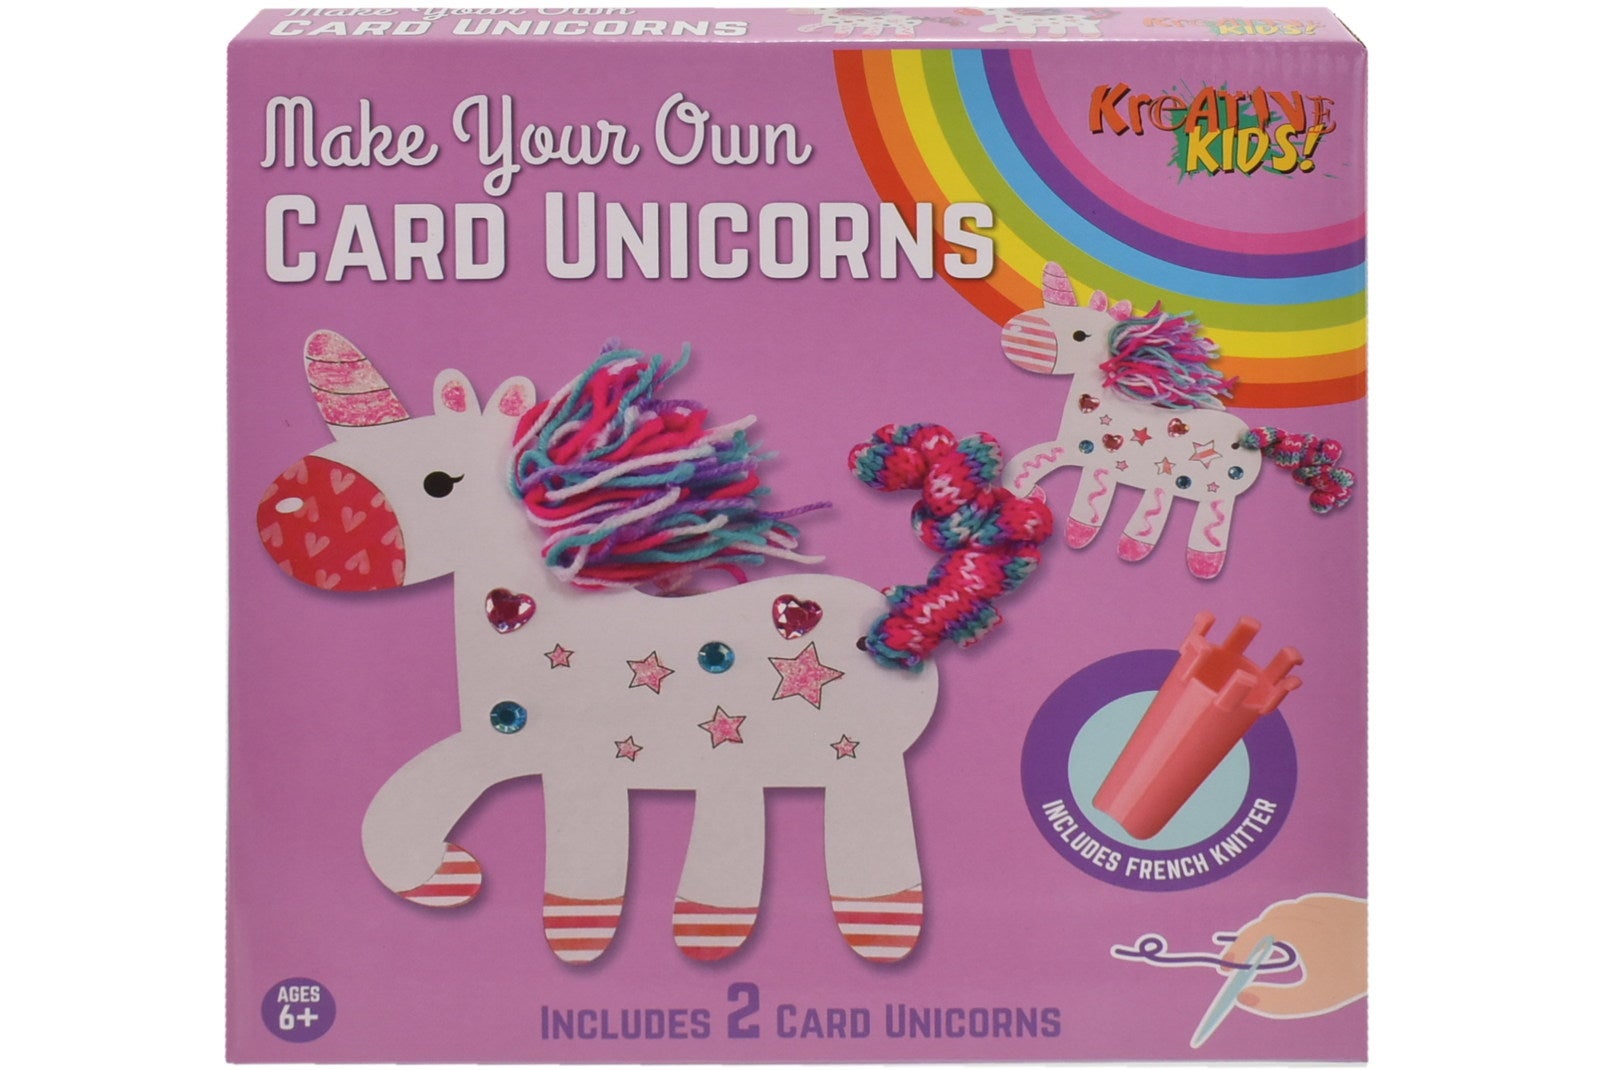 Make Your Own Card Unicorns